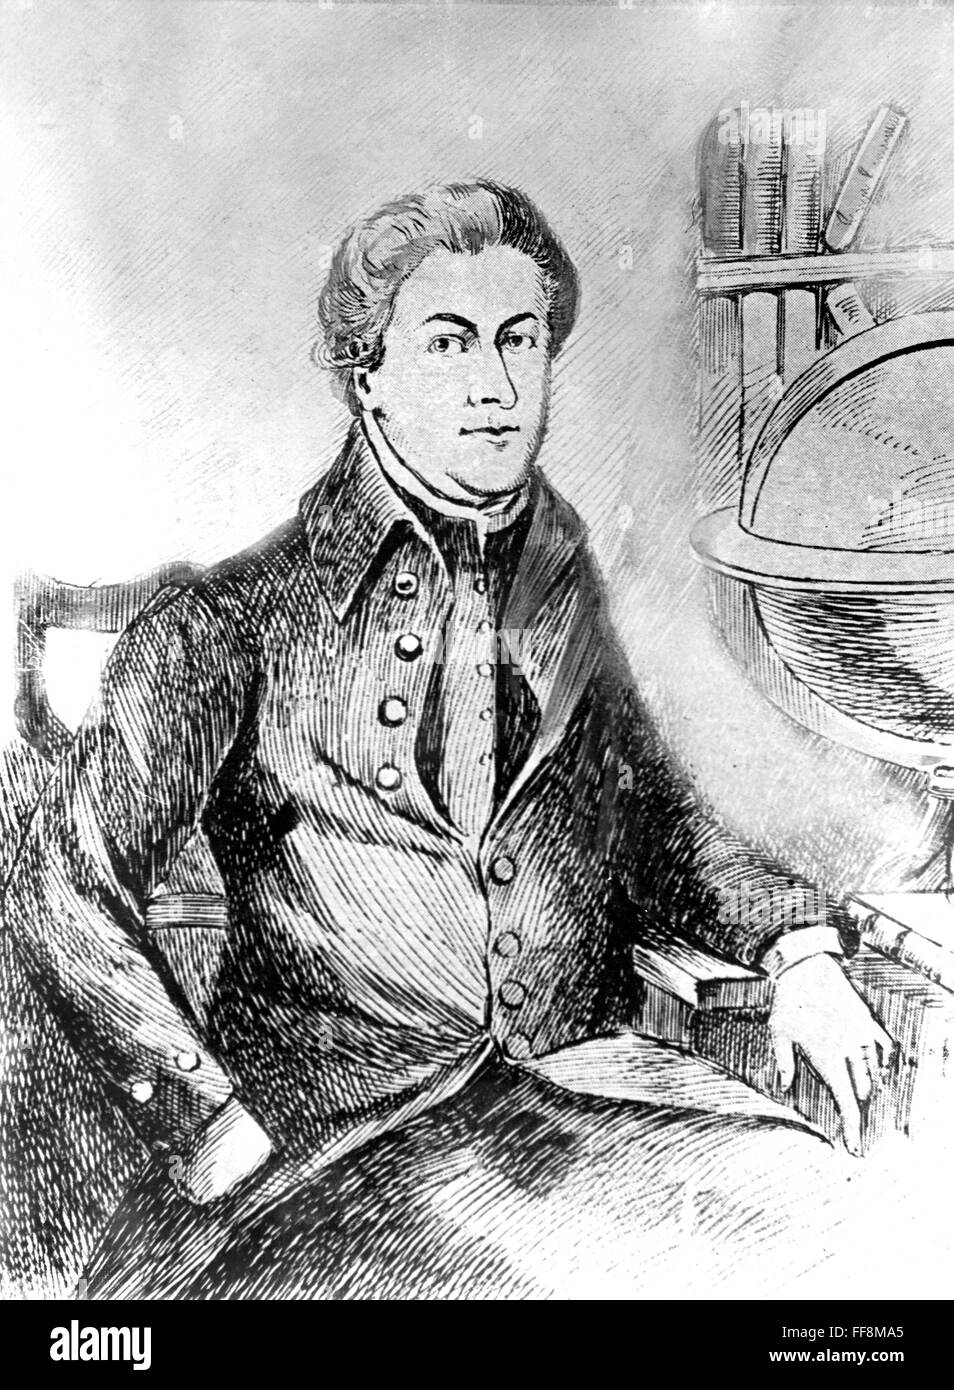 GEORGE Vancouver (1758?-1798). Navigatore inglese Foto stock - Alamy